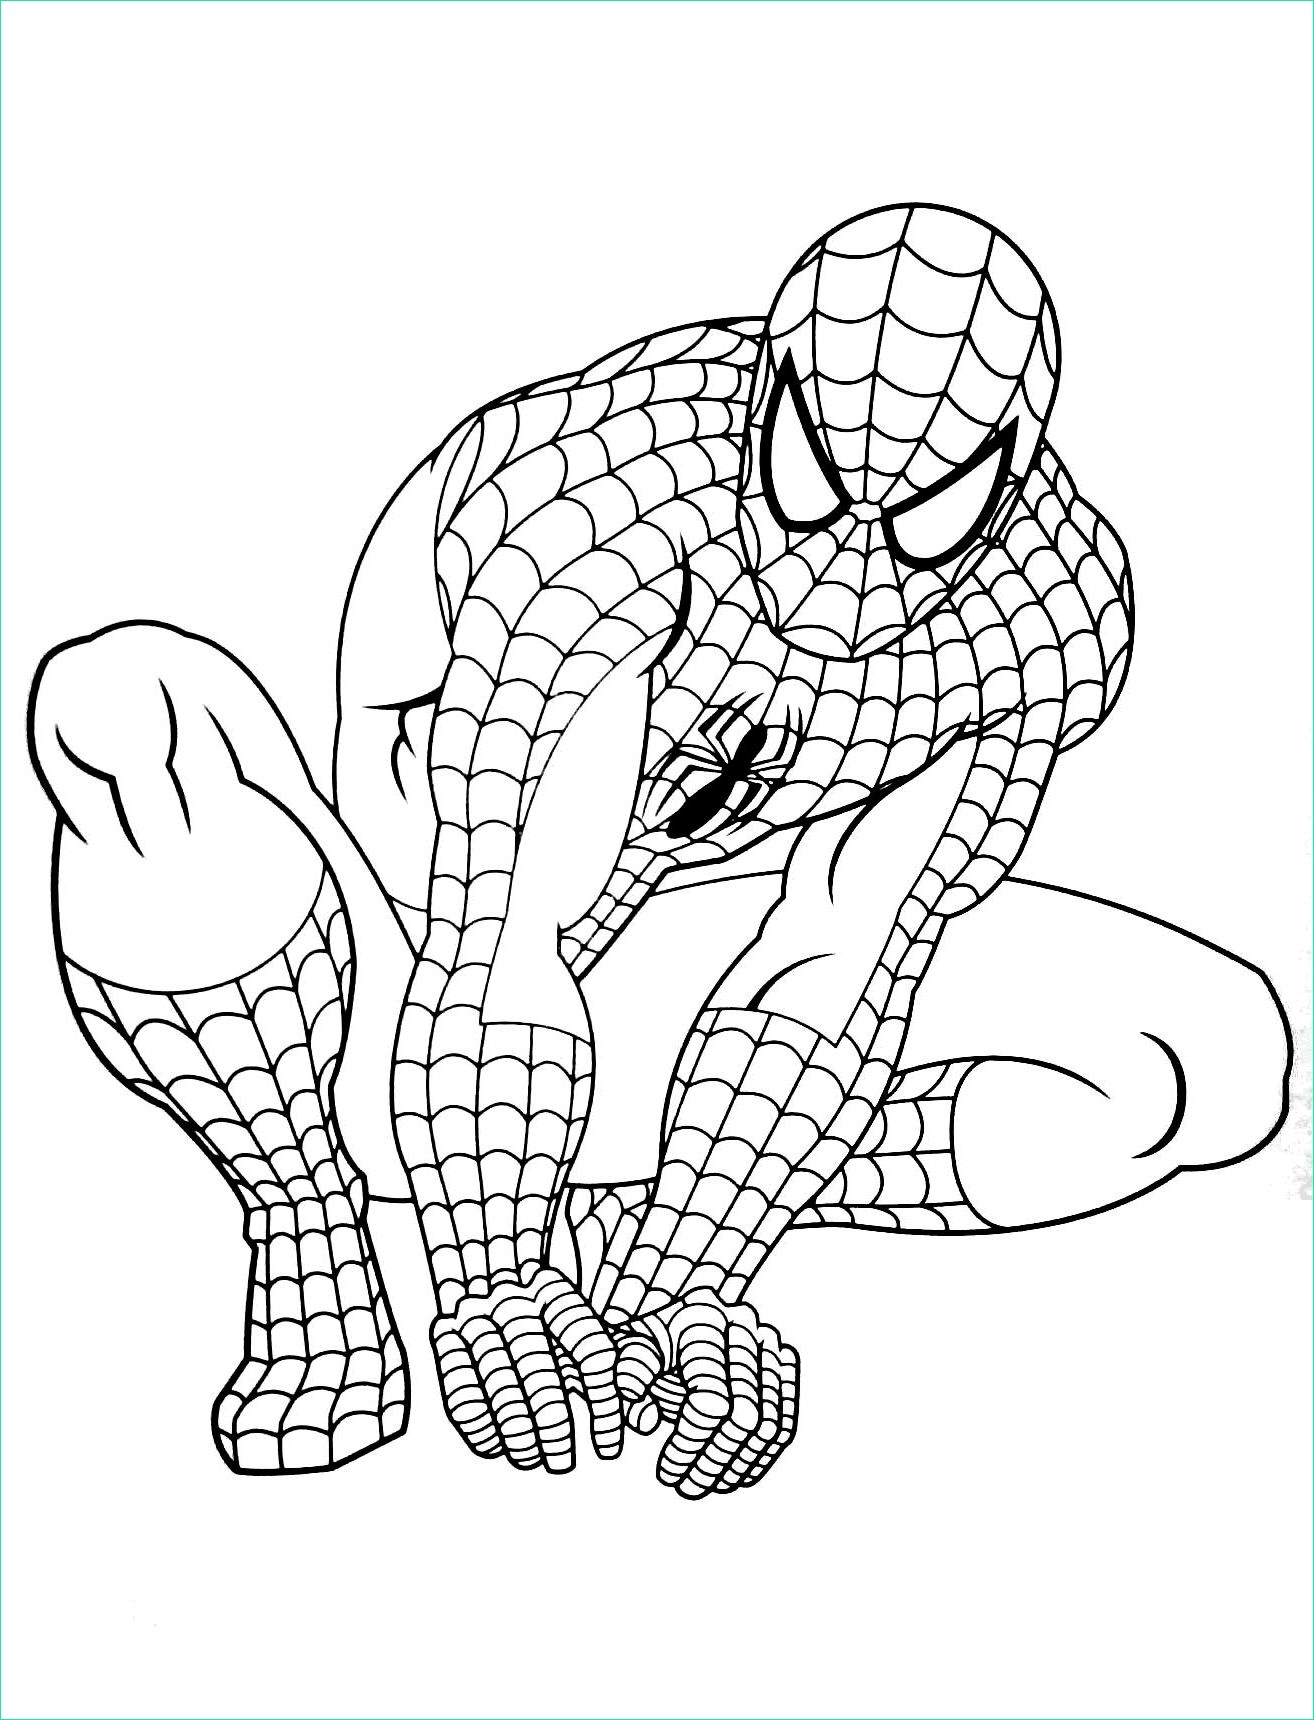 Coloriage De Spiderman Inspirant Collection Coloriage De Spiderman à Imprimer Pour Enfants Coloriage